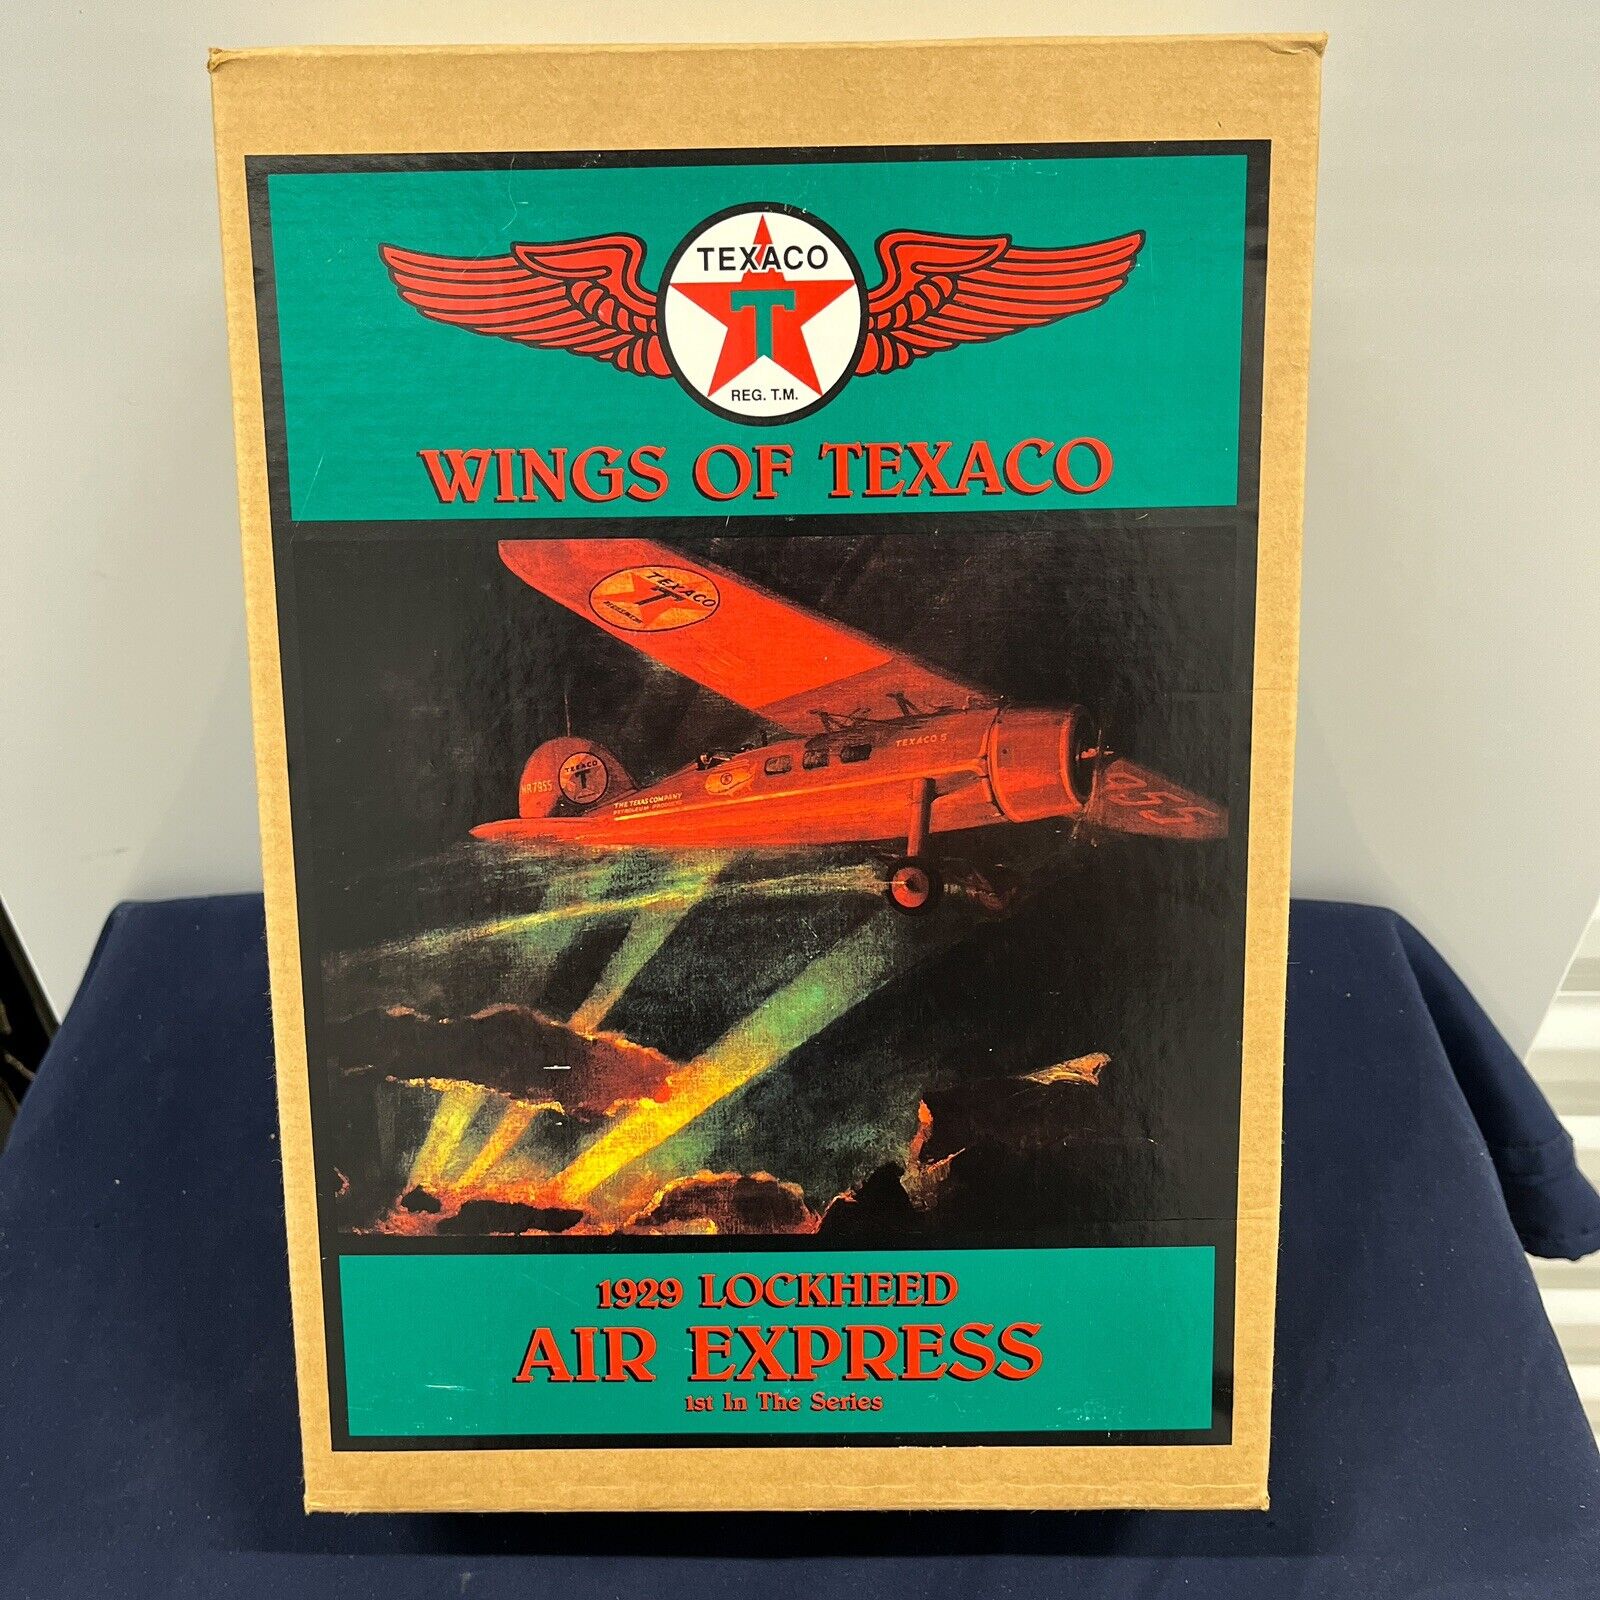 Wings of Texaco - 1929 Lockheed Air Express - 1st in Series